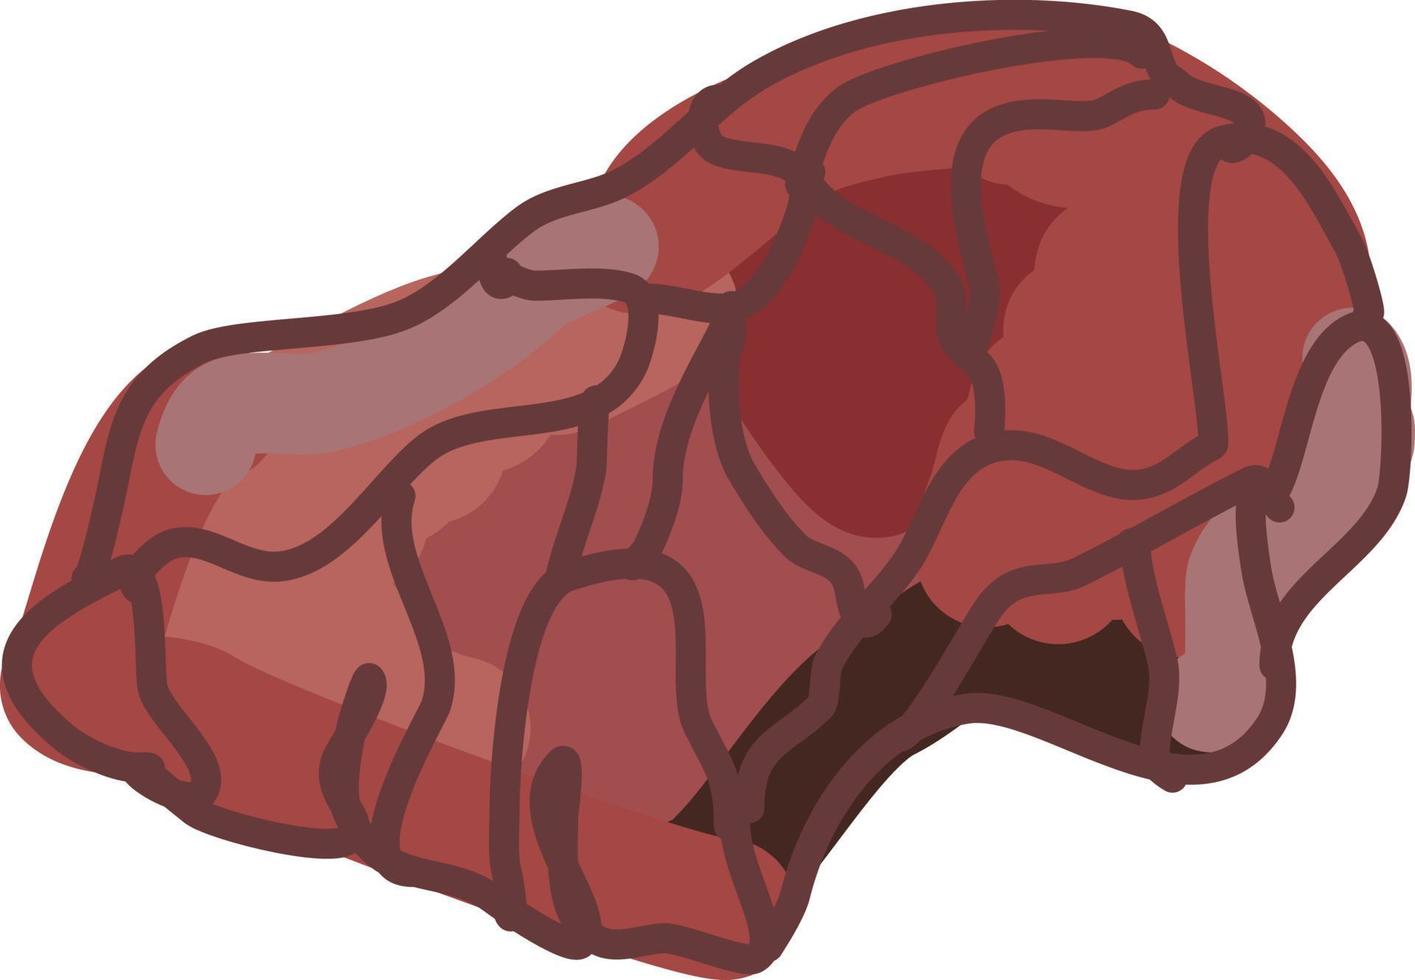 Bone chuck roast, illustration, vector on white background.